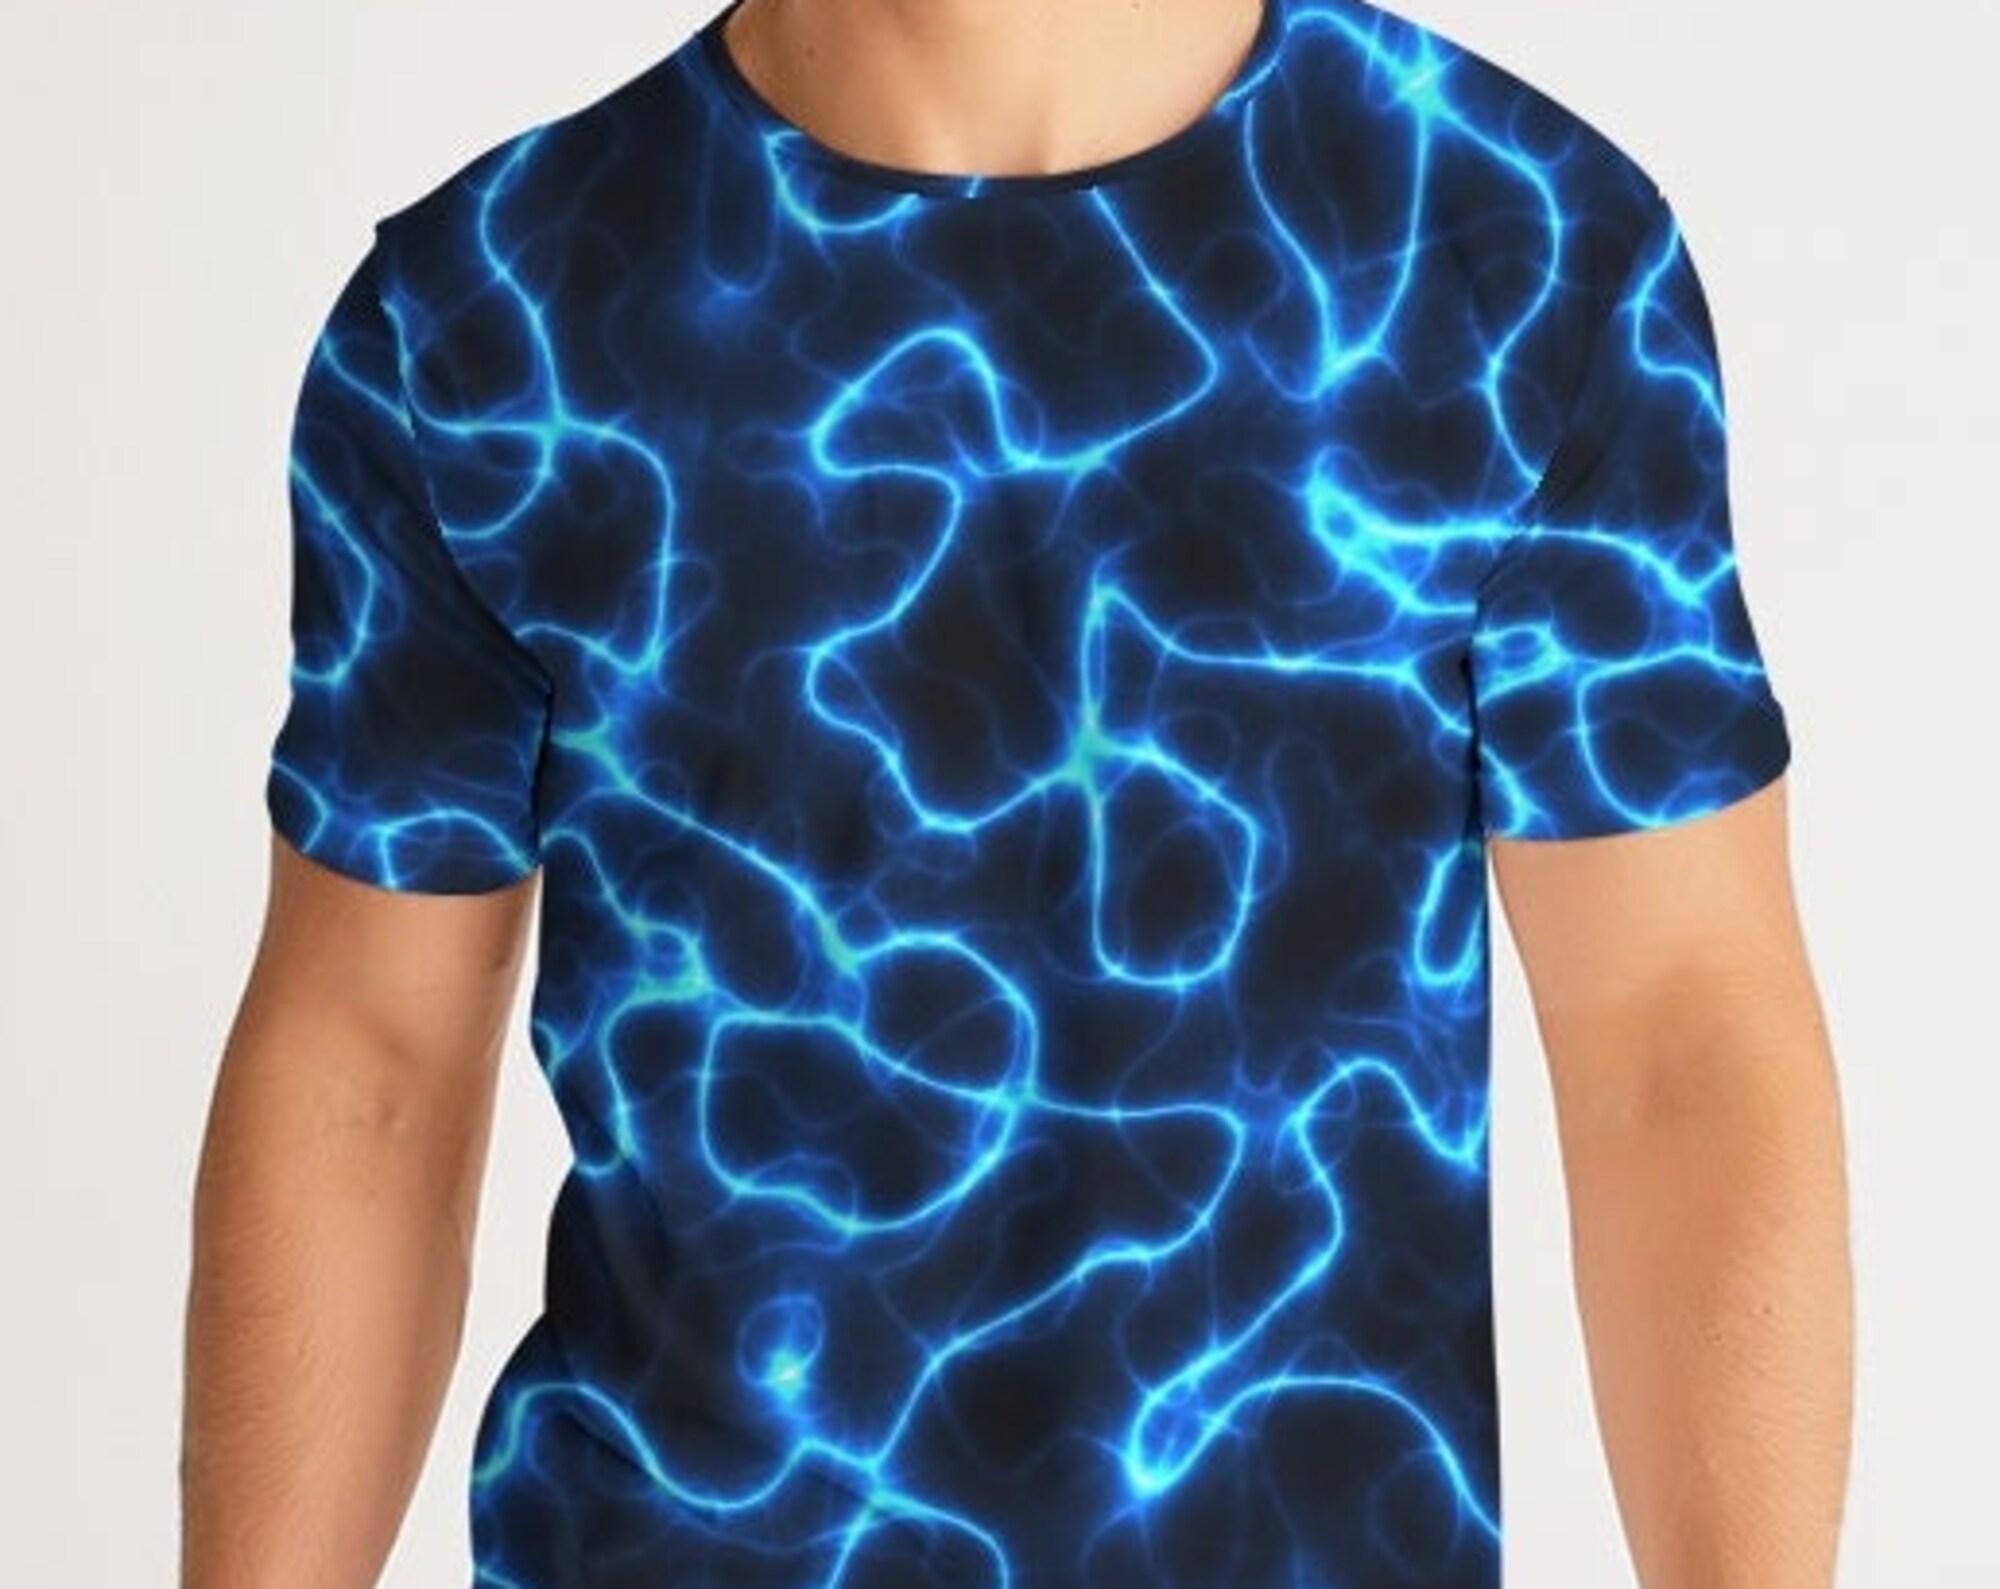 Discover Rave Electric Blue Lightning 3D T Shirt